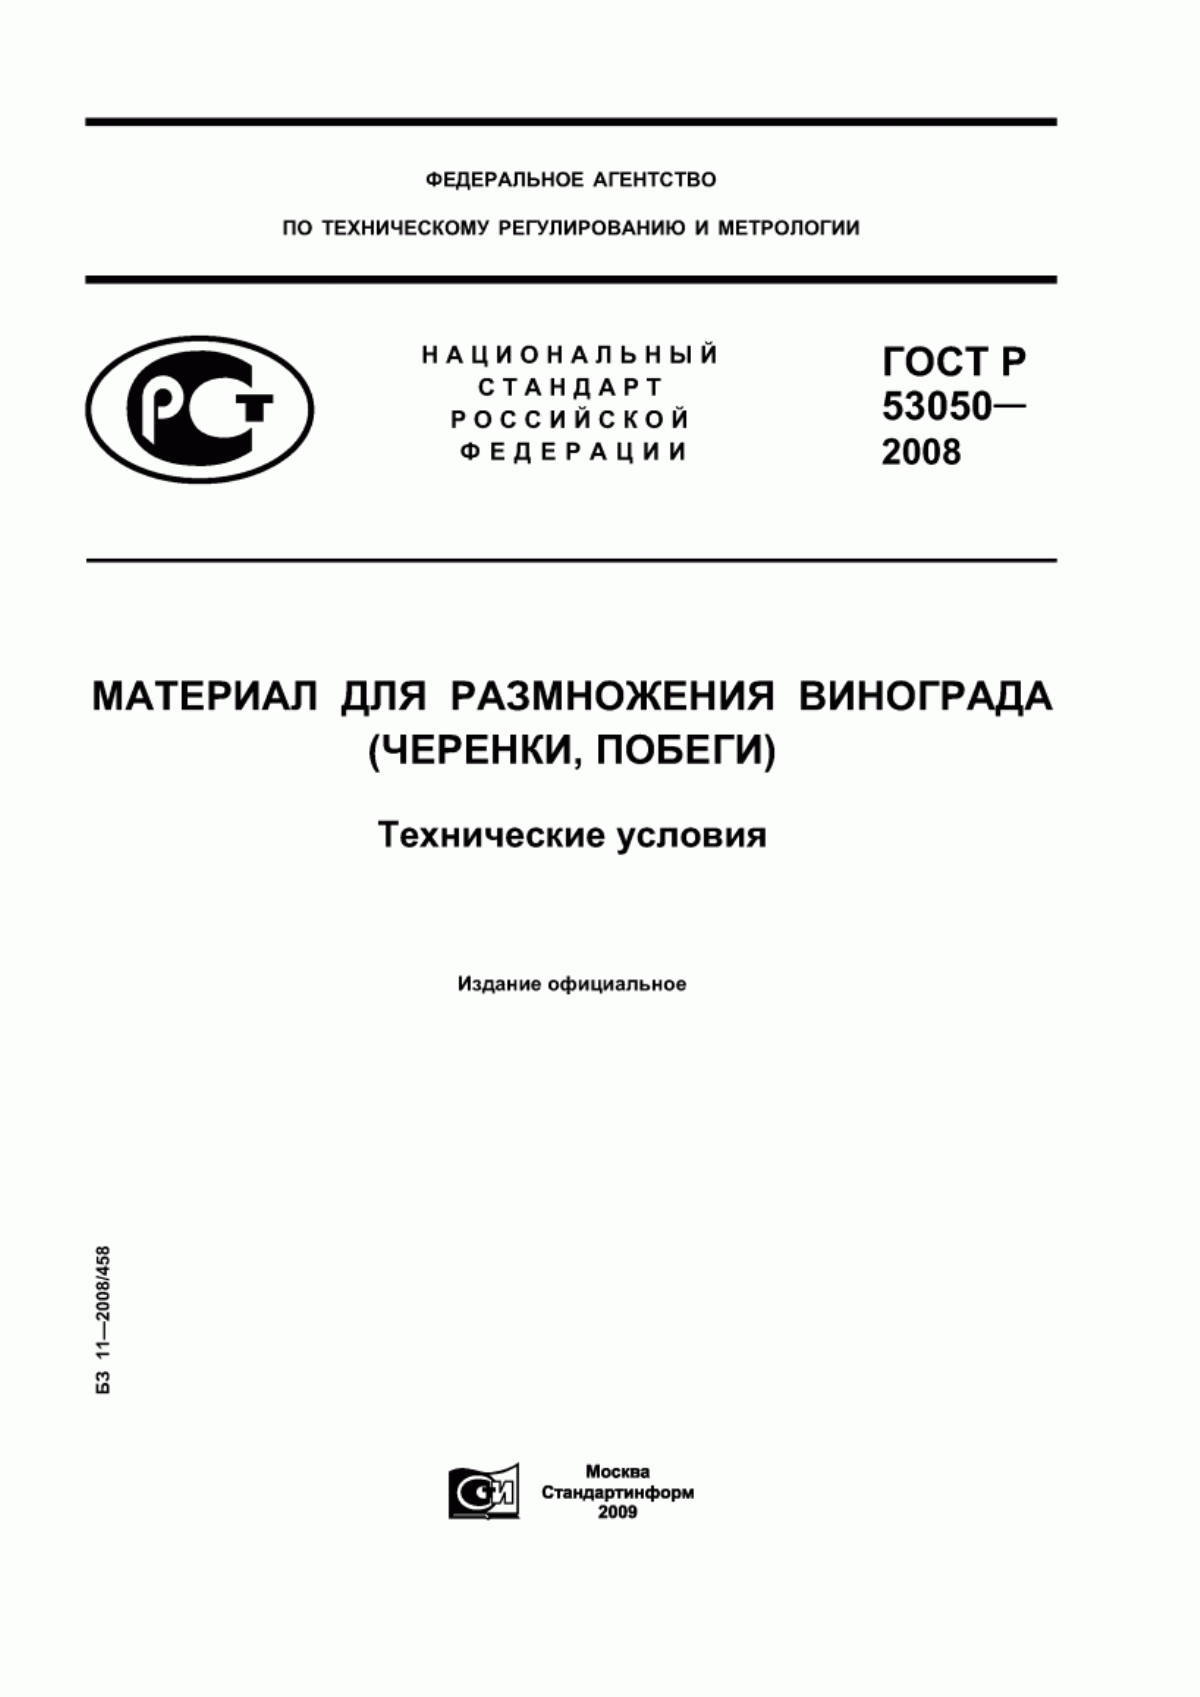 ГОСТ Р 53050-2008 Материал для размножения винограда (черенки, побеги). Технические условия